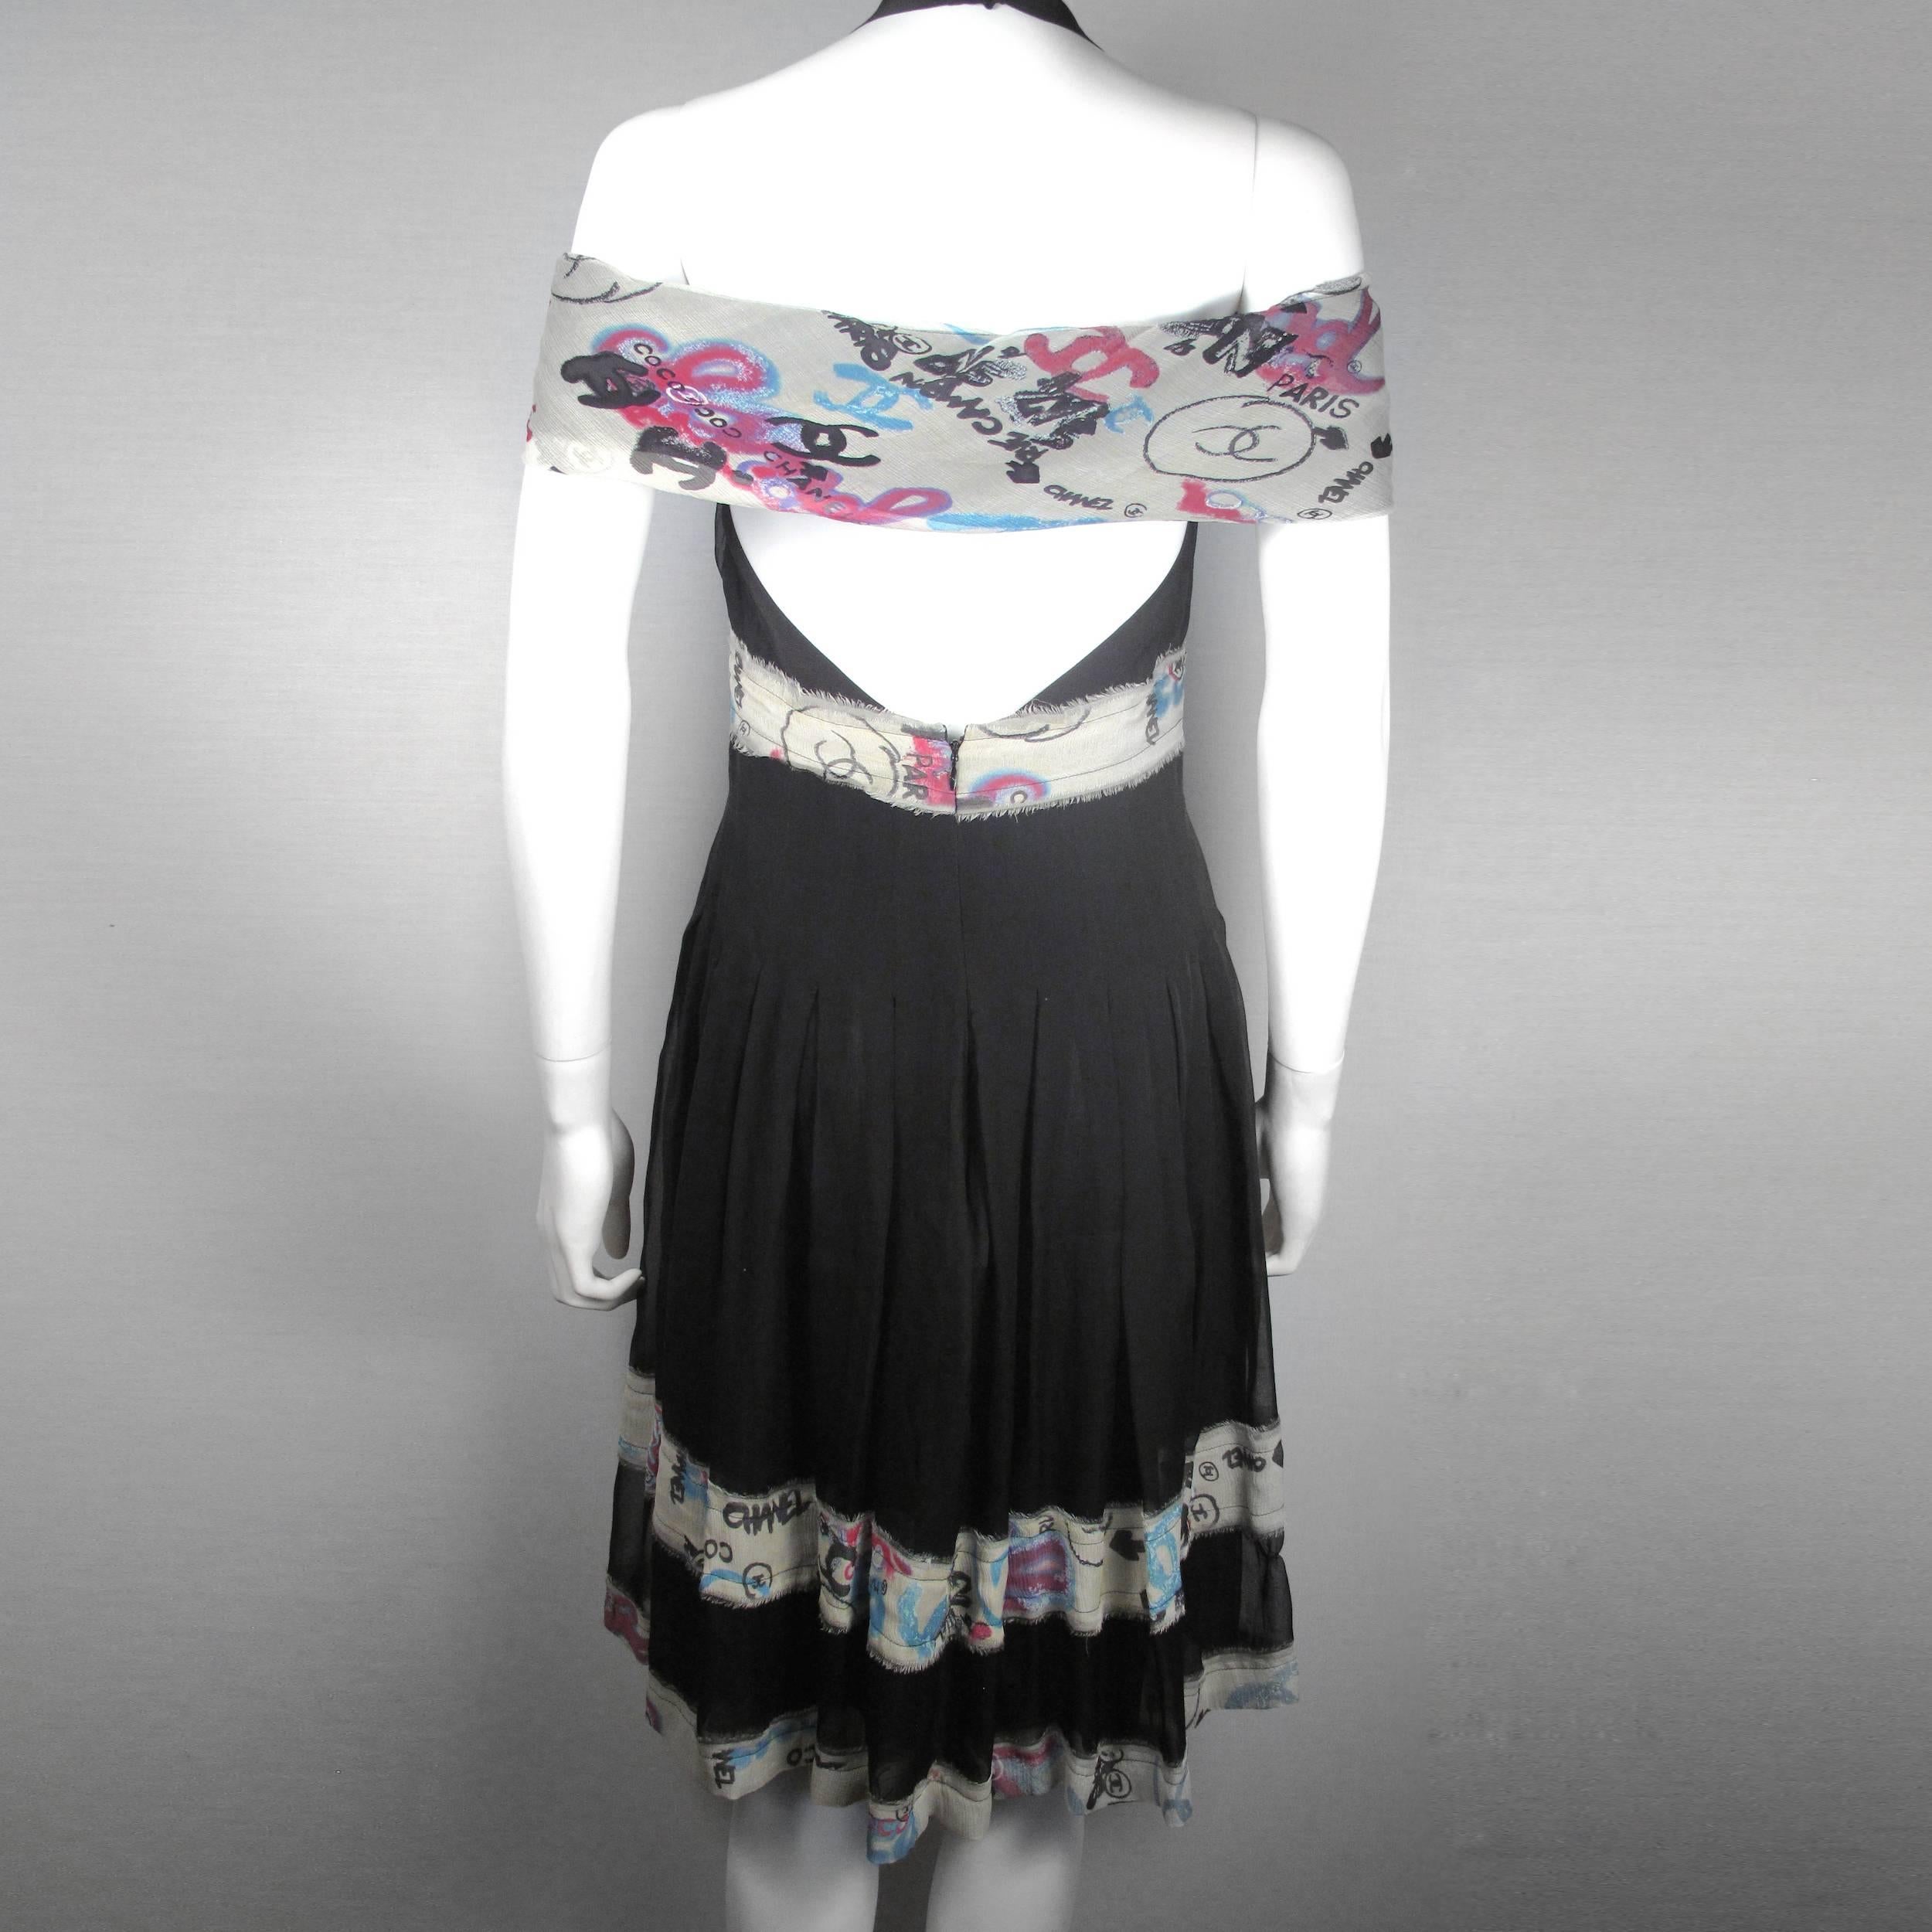 Chanel - Graffiti Dress

Size:  38 - 6 

Color:   Black

Material: 100% Silk

------------------------------------------------------------

Details:

- off the shoulder detail

- halter neck

- graffiti print trim

- zip back